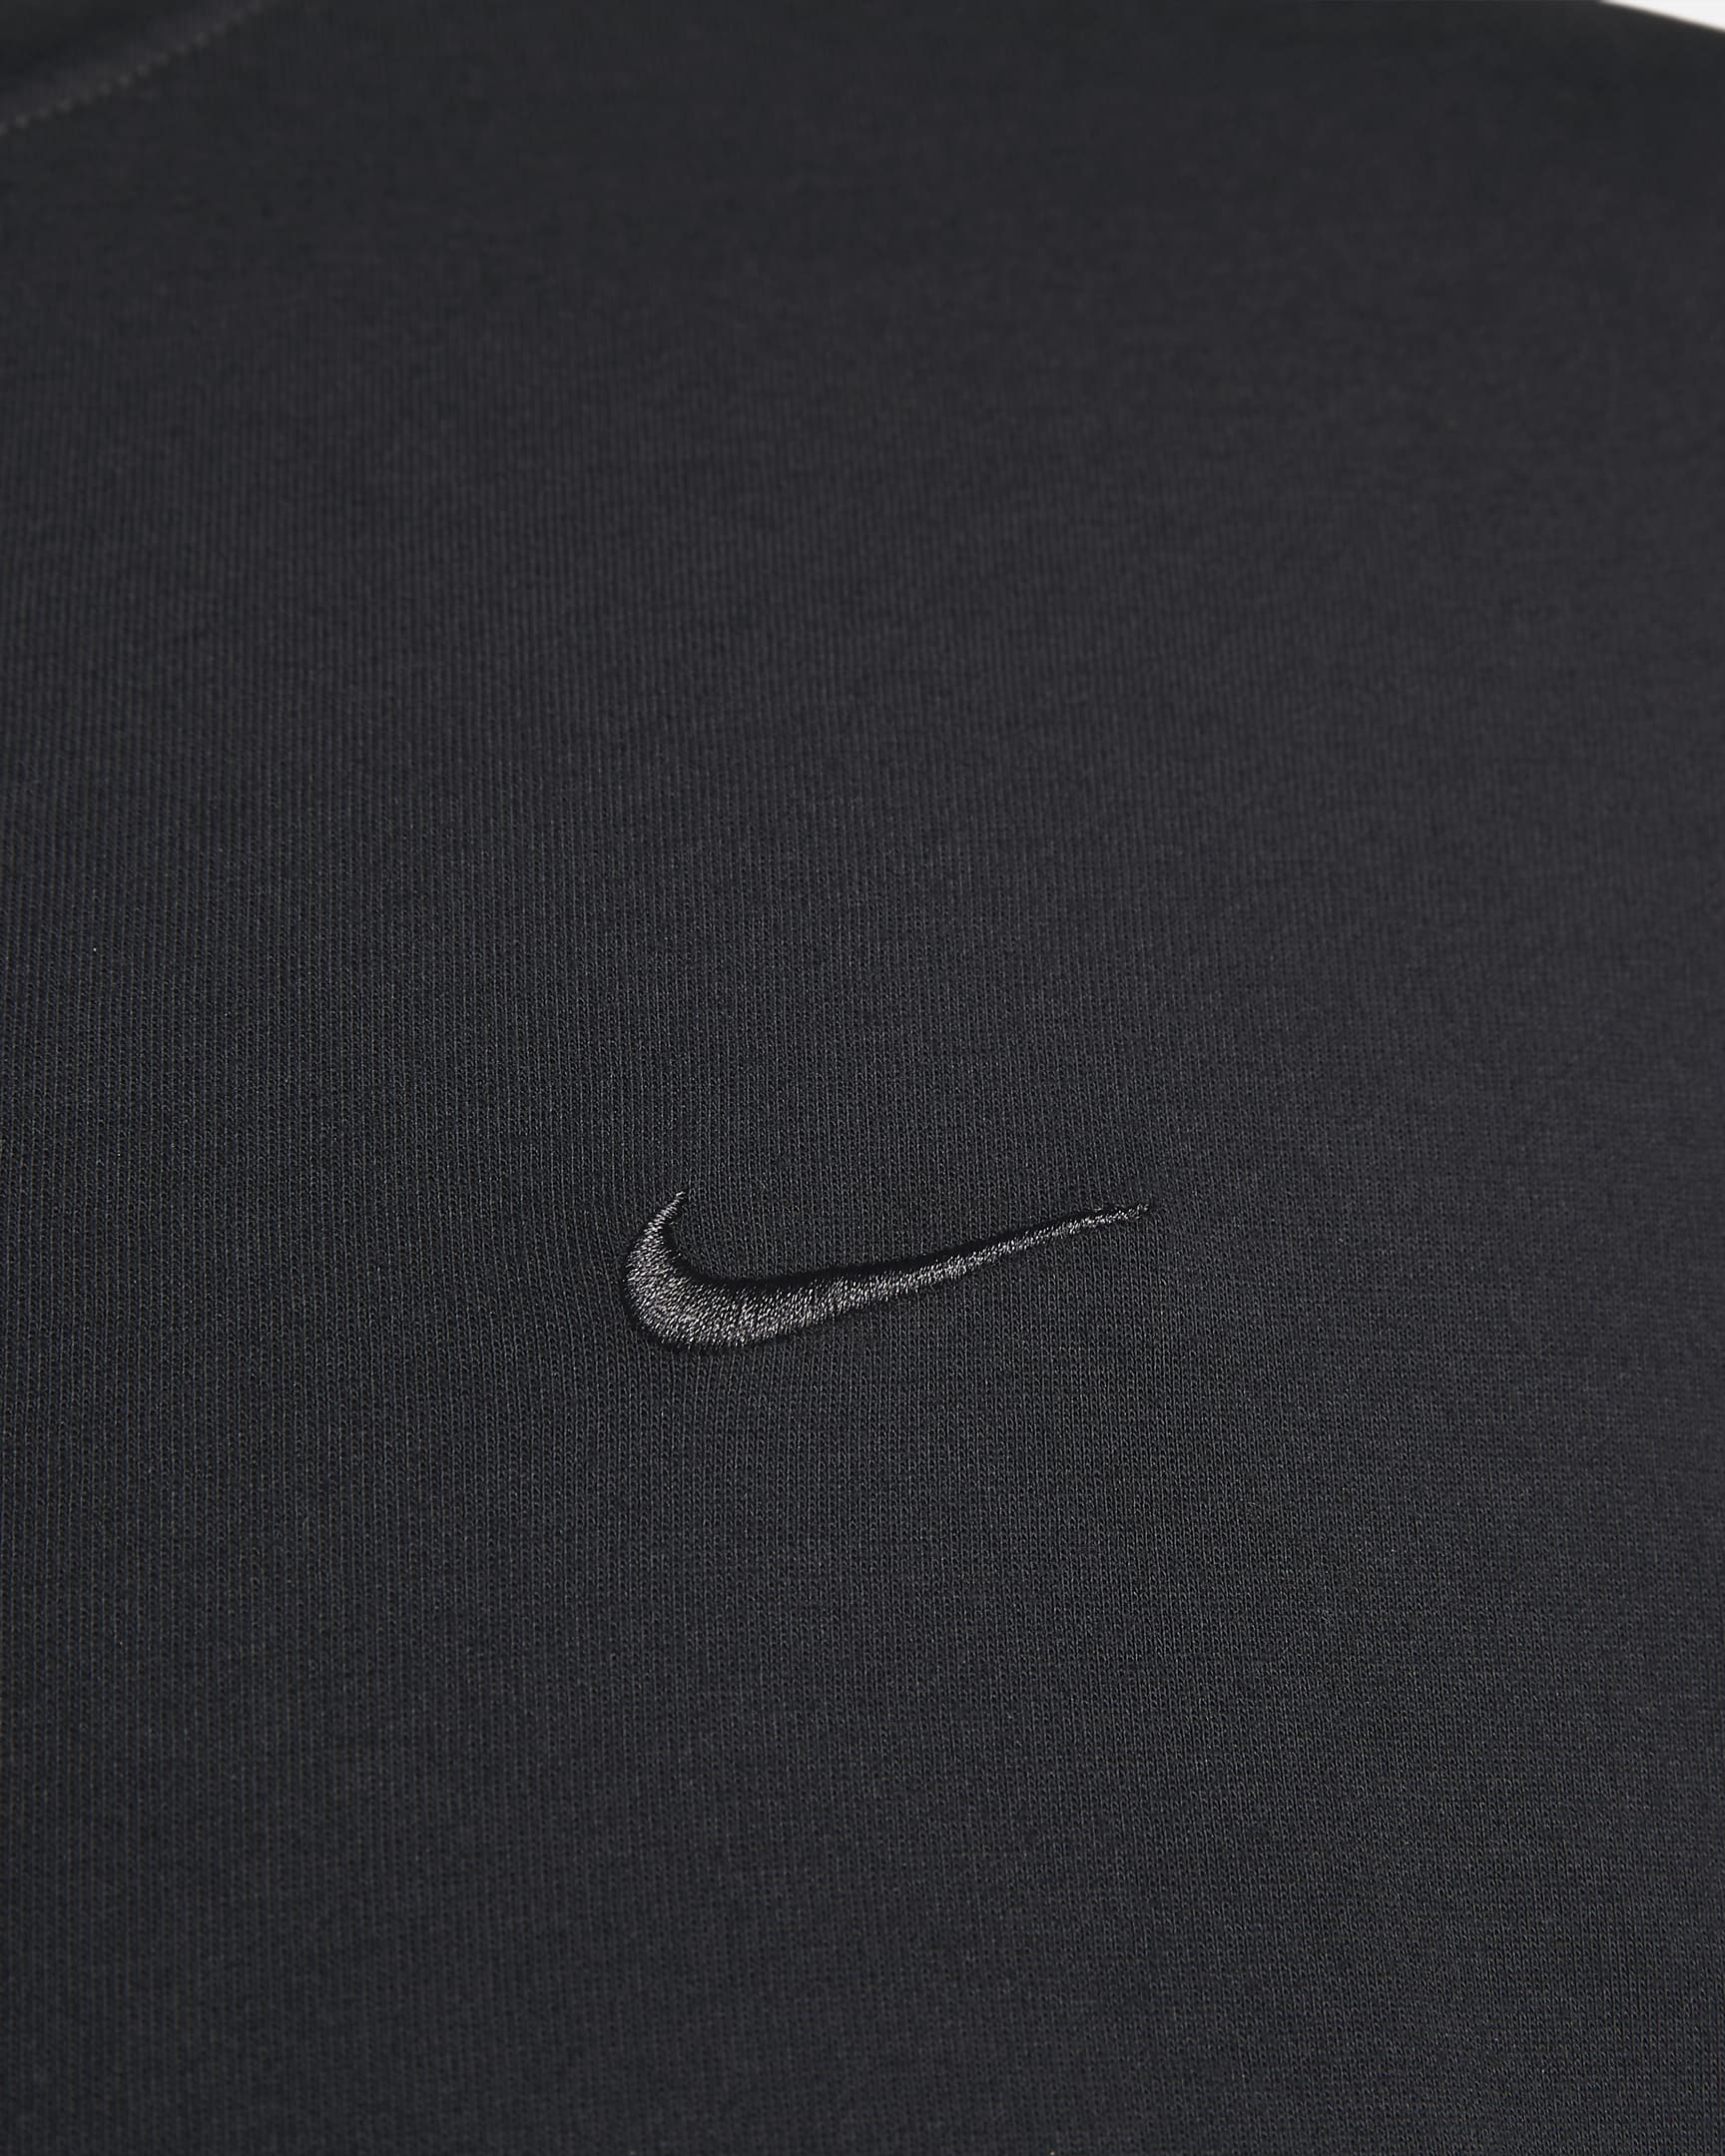 Nike Primary Men's Dri-FIT Short-sleeve Versatile Top - Black/Black